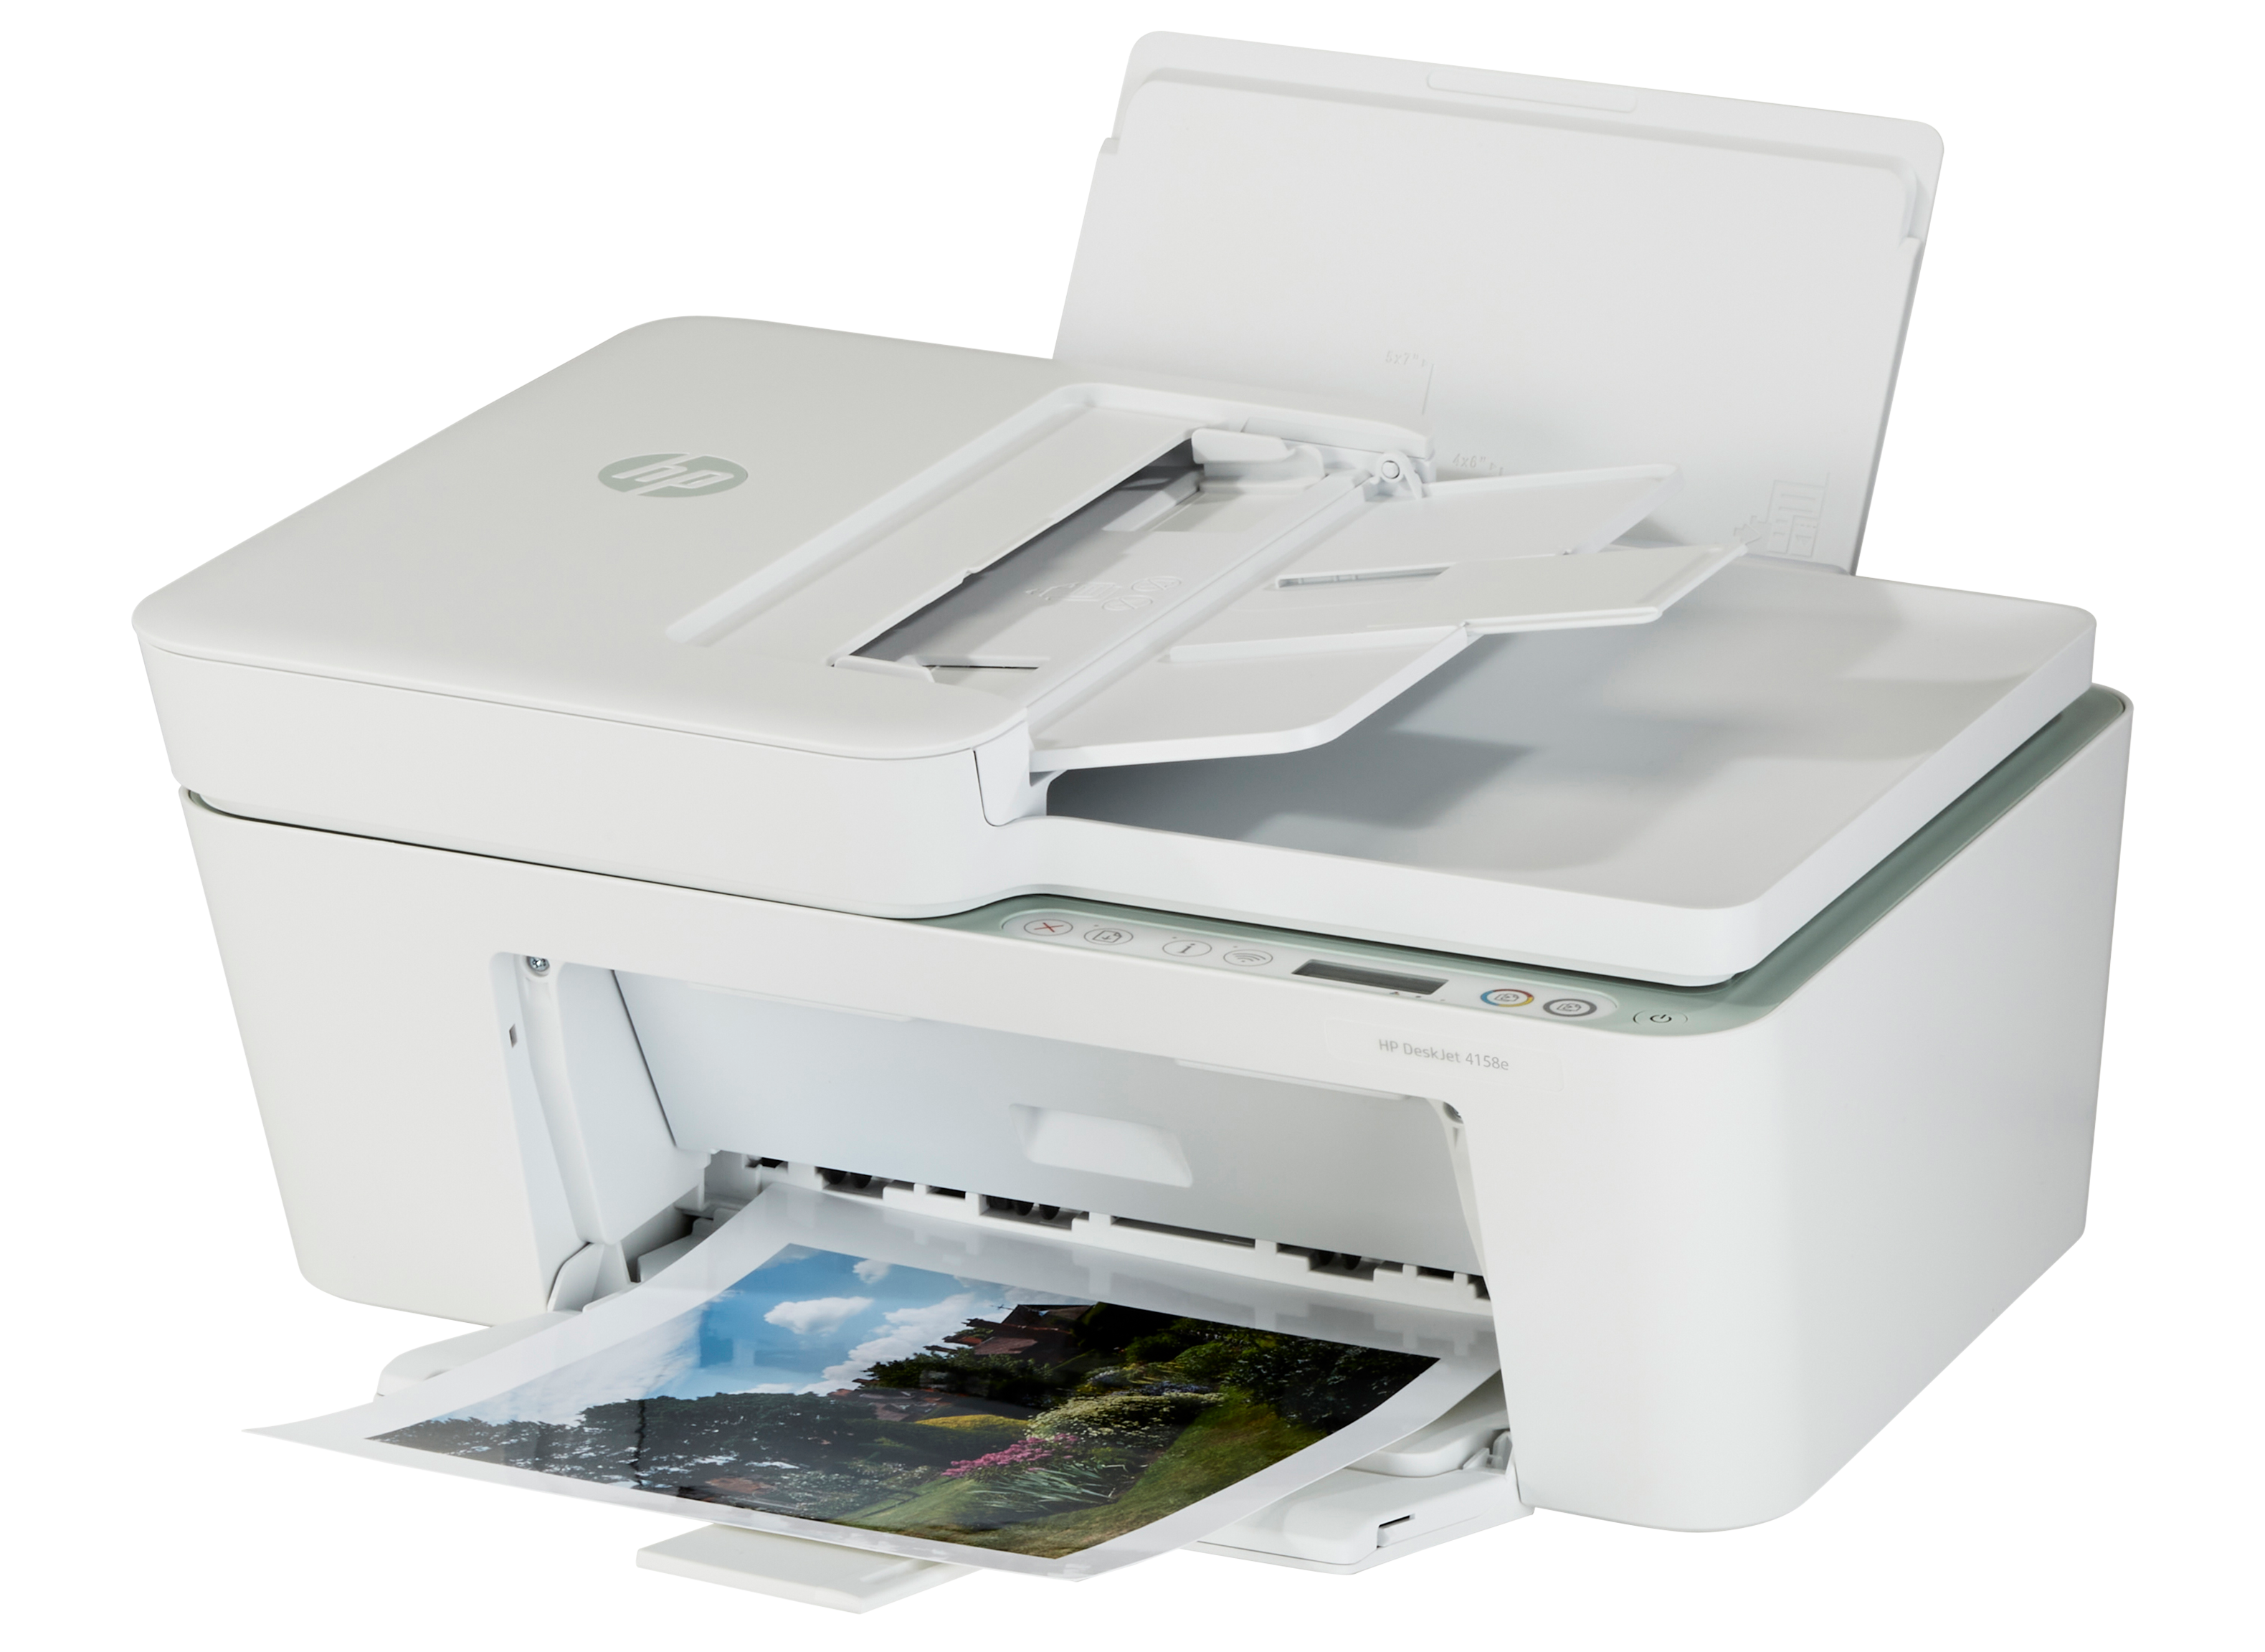 Deskjet 4158e Printer Review - Consumer Reports